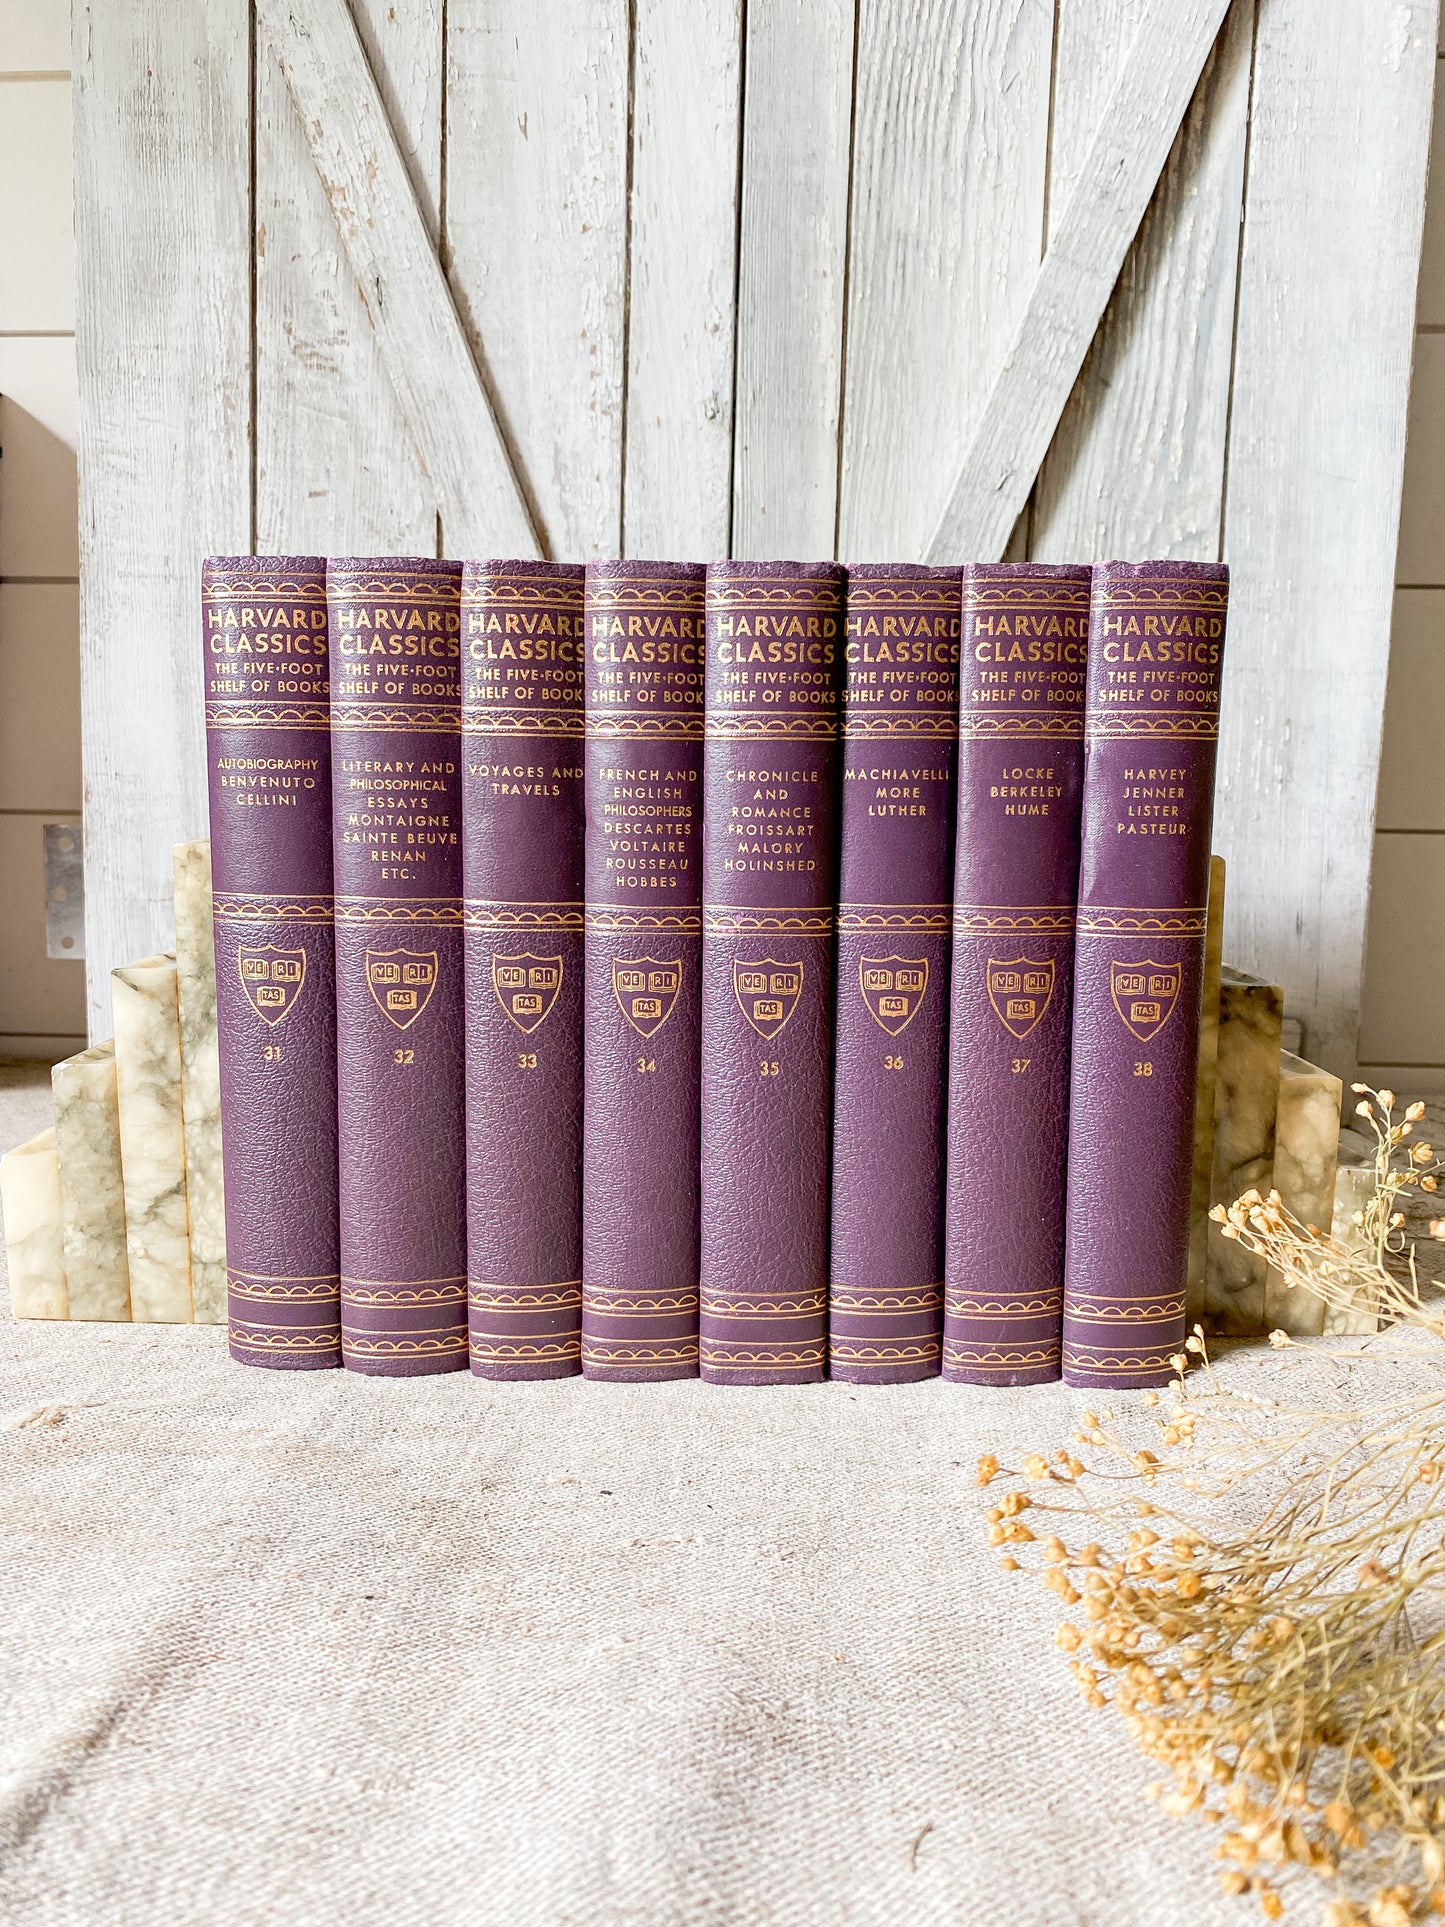 Vintage Set of 8 Purple Harvard Classics Five-Foot Shelf of Books, 1959